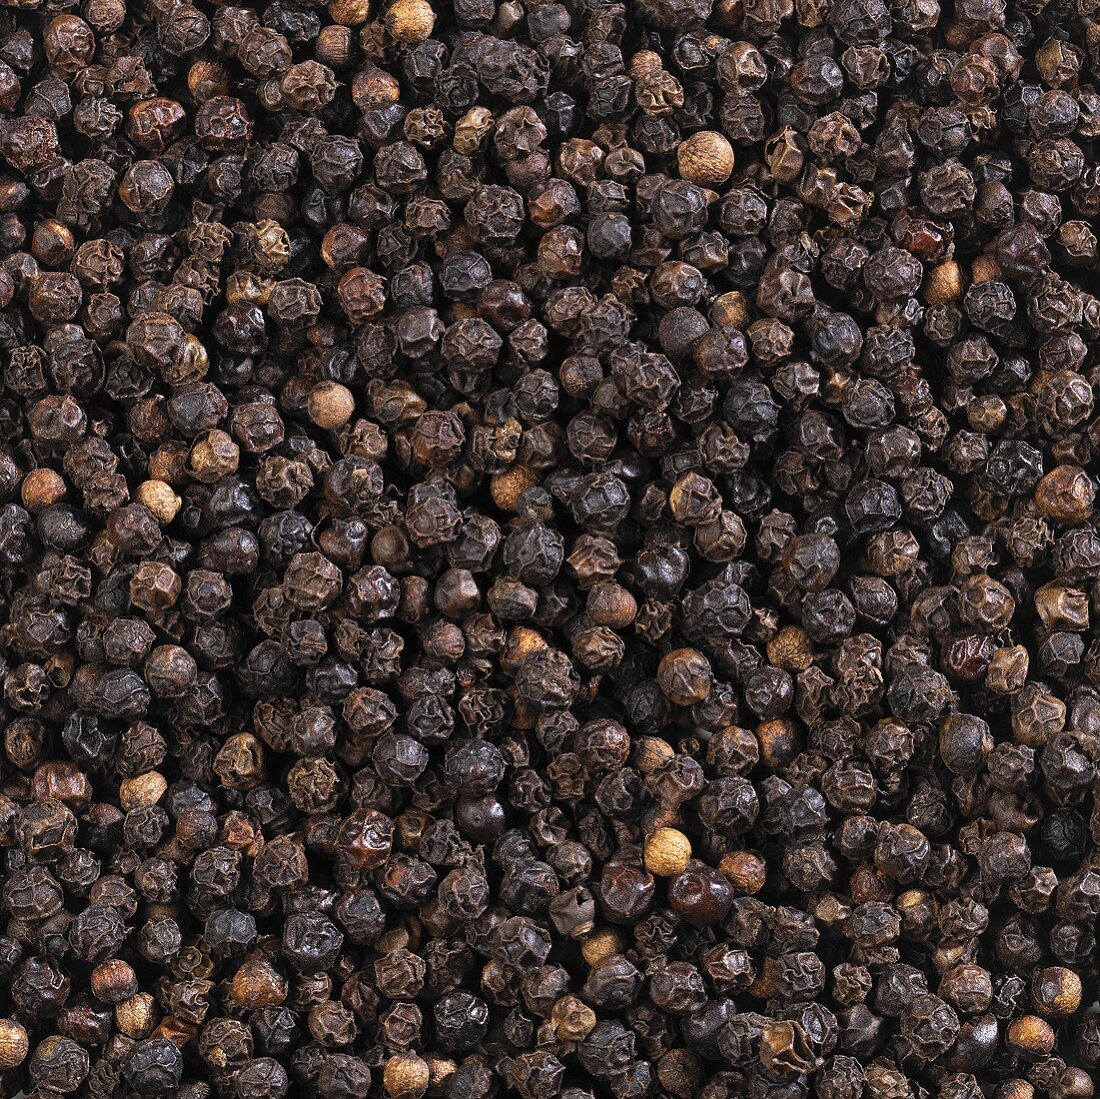 Peppercorns (macro zoom)